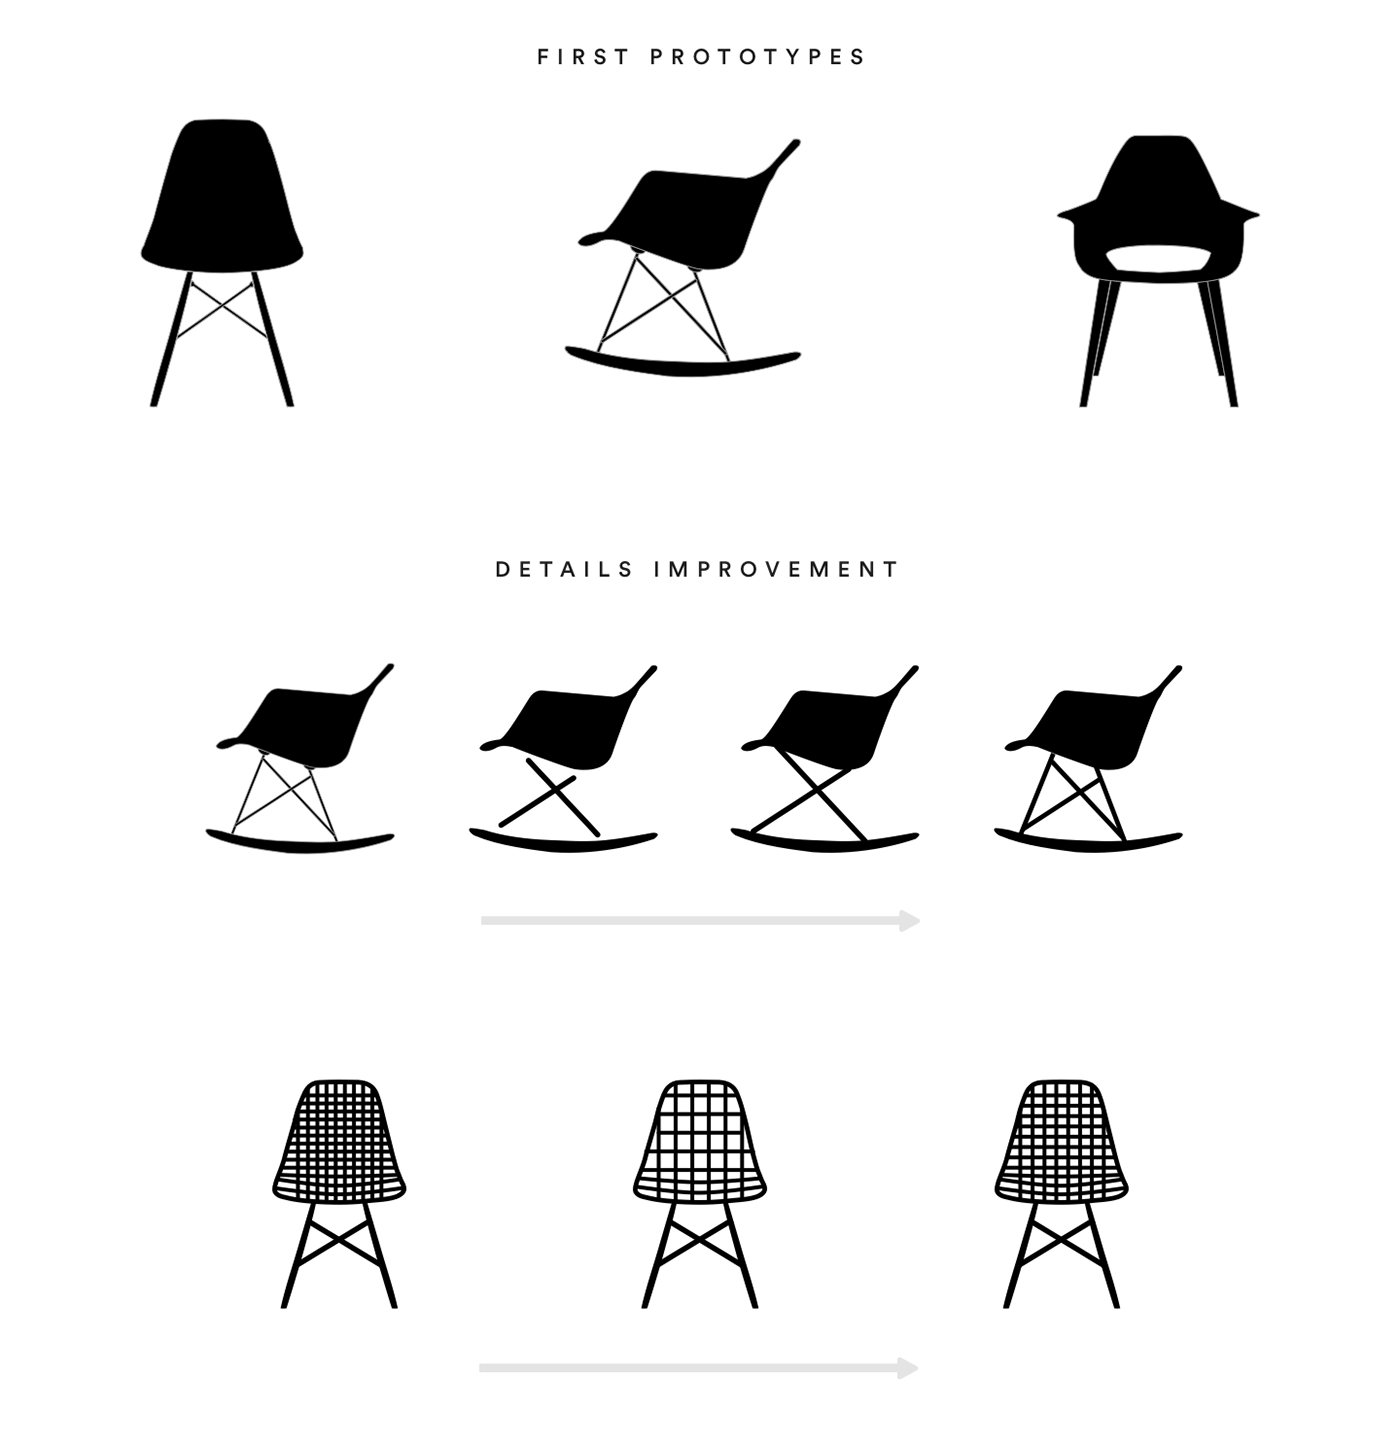 EAMES Icon pictogram chairs furniture logo Vitra